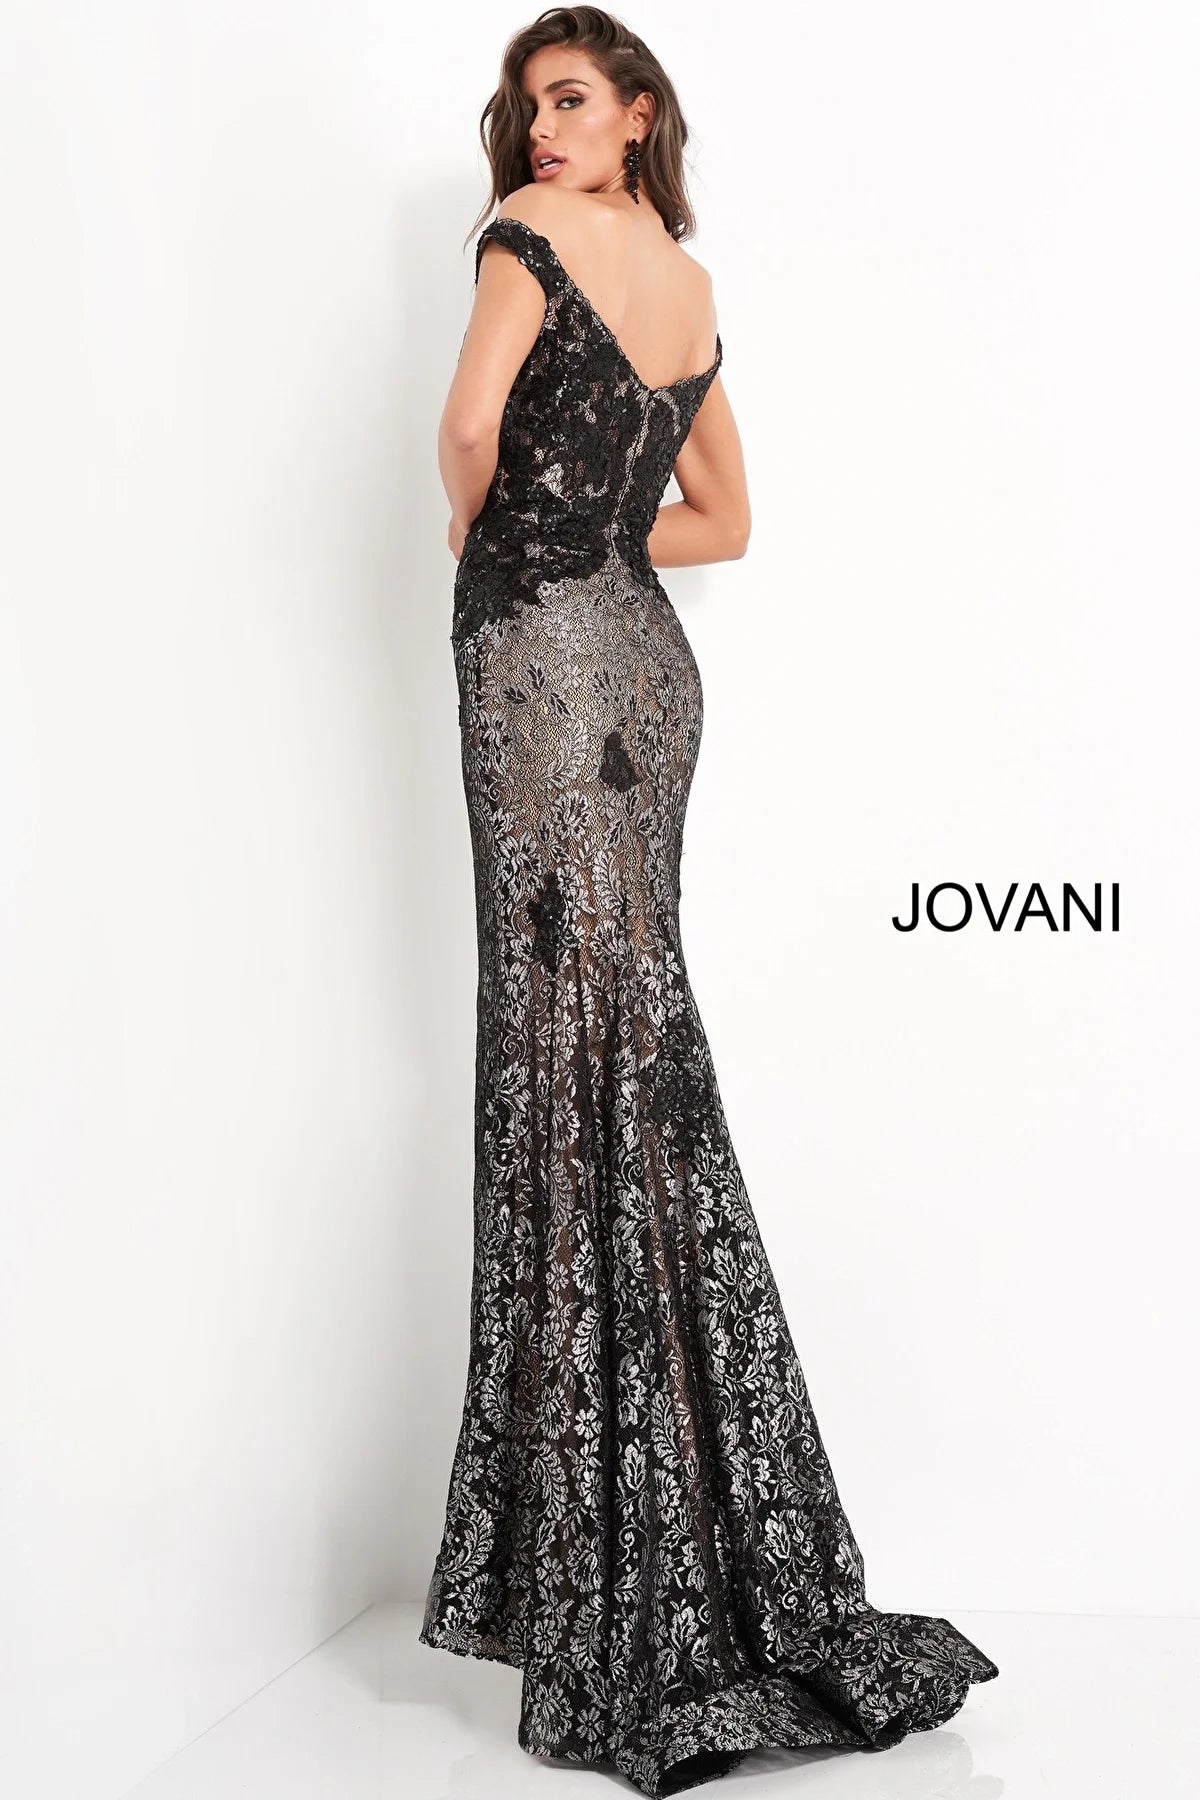 Jovani 06437 Off the Shoulder Lace Prom Dress